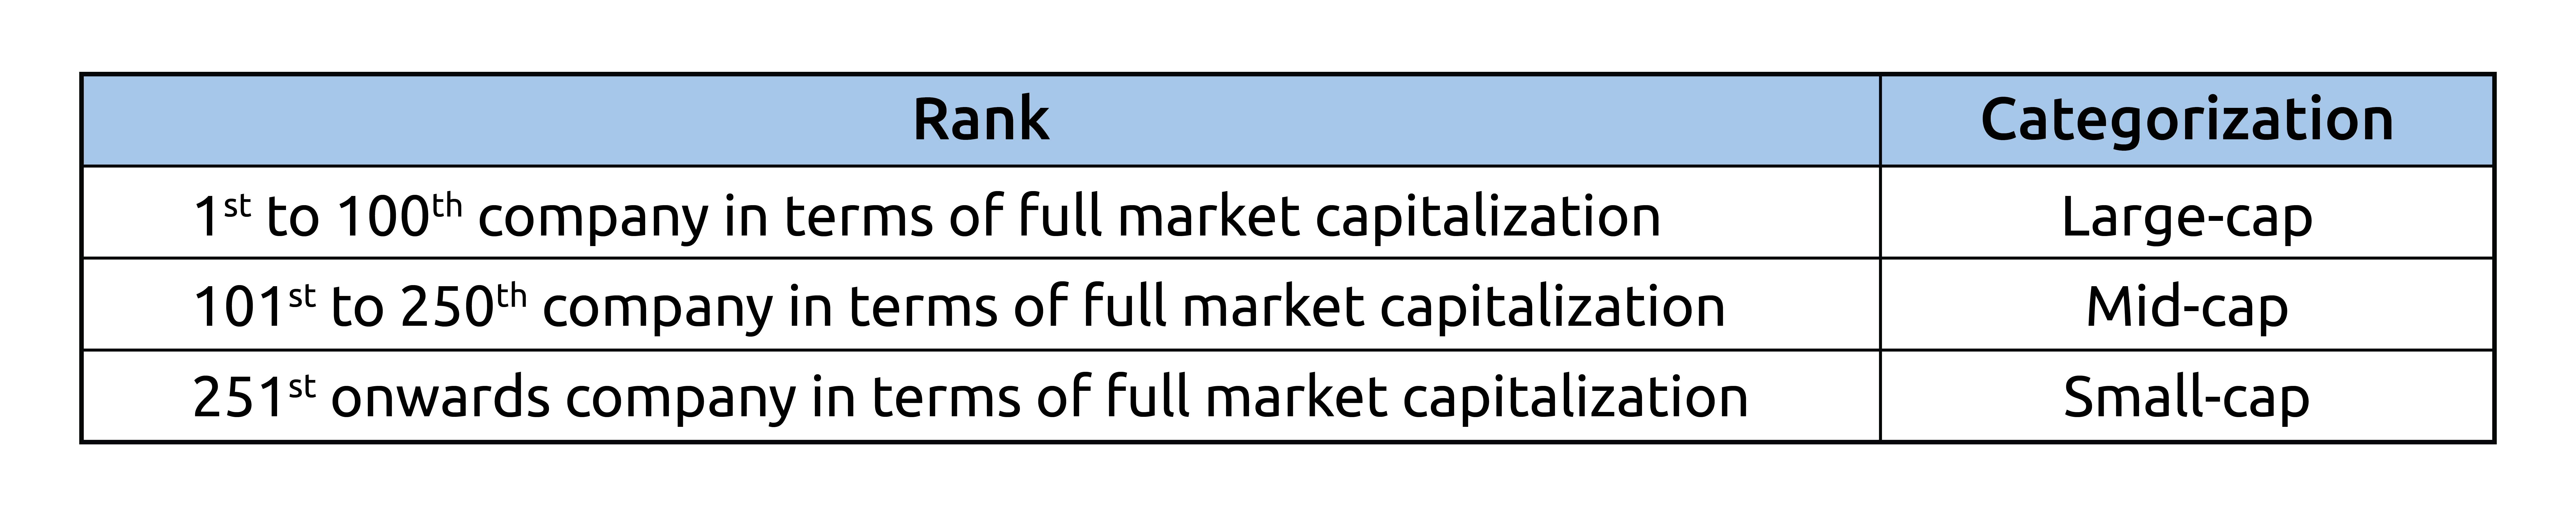 Mid-Cap Mutual Funds Categorization